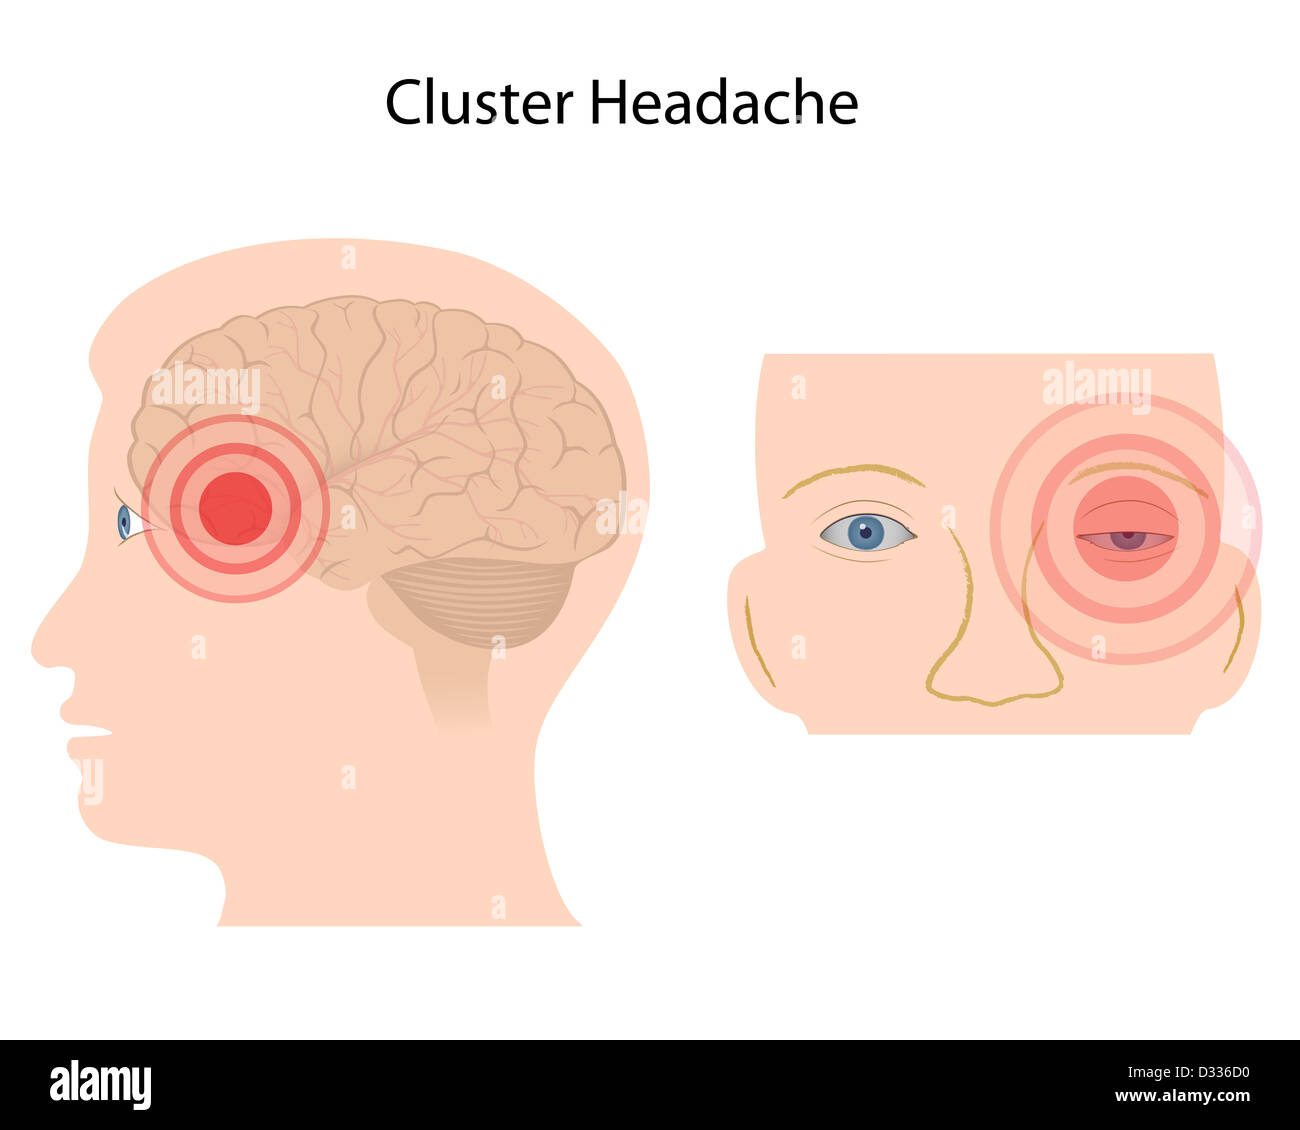 Cluster headache Stock Photo